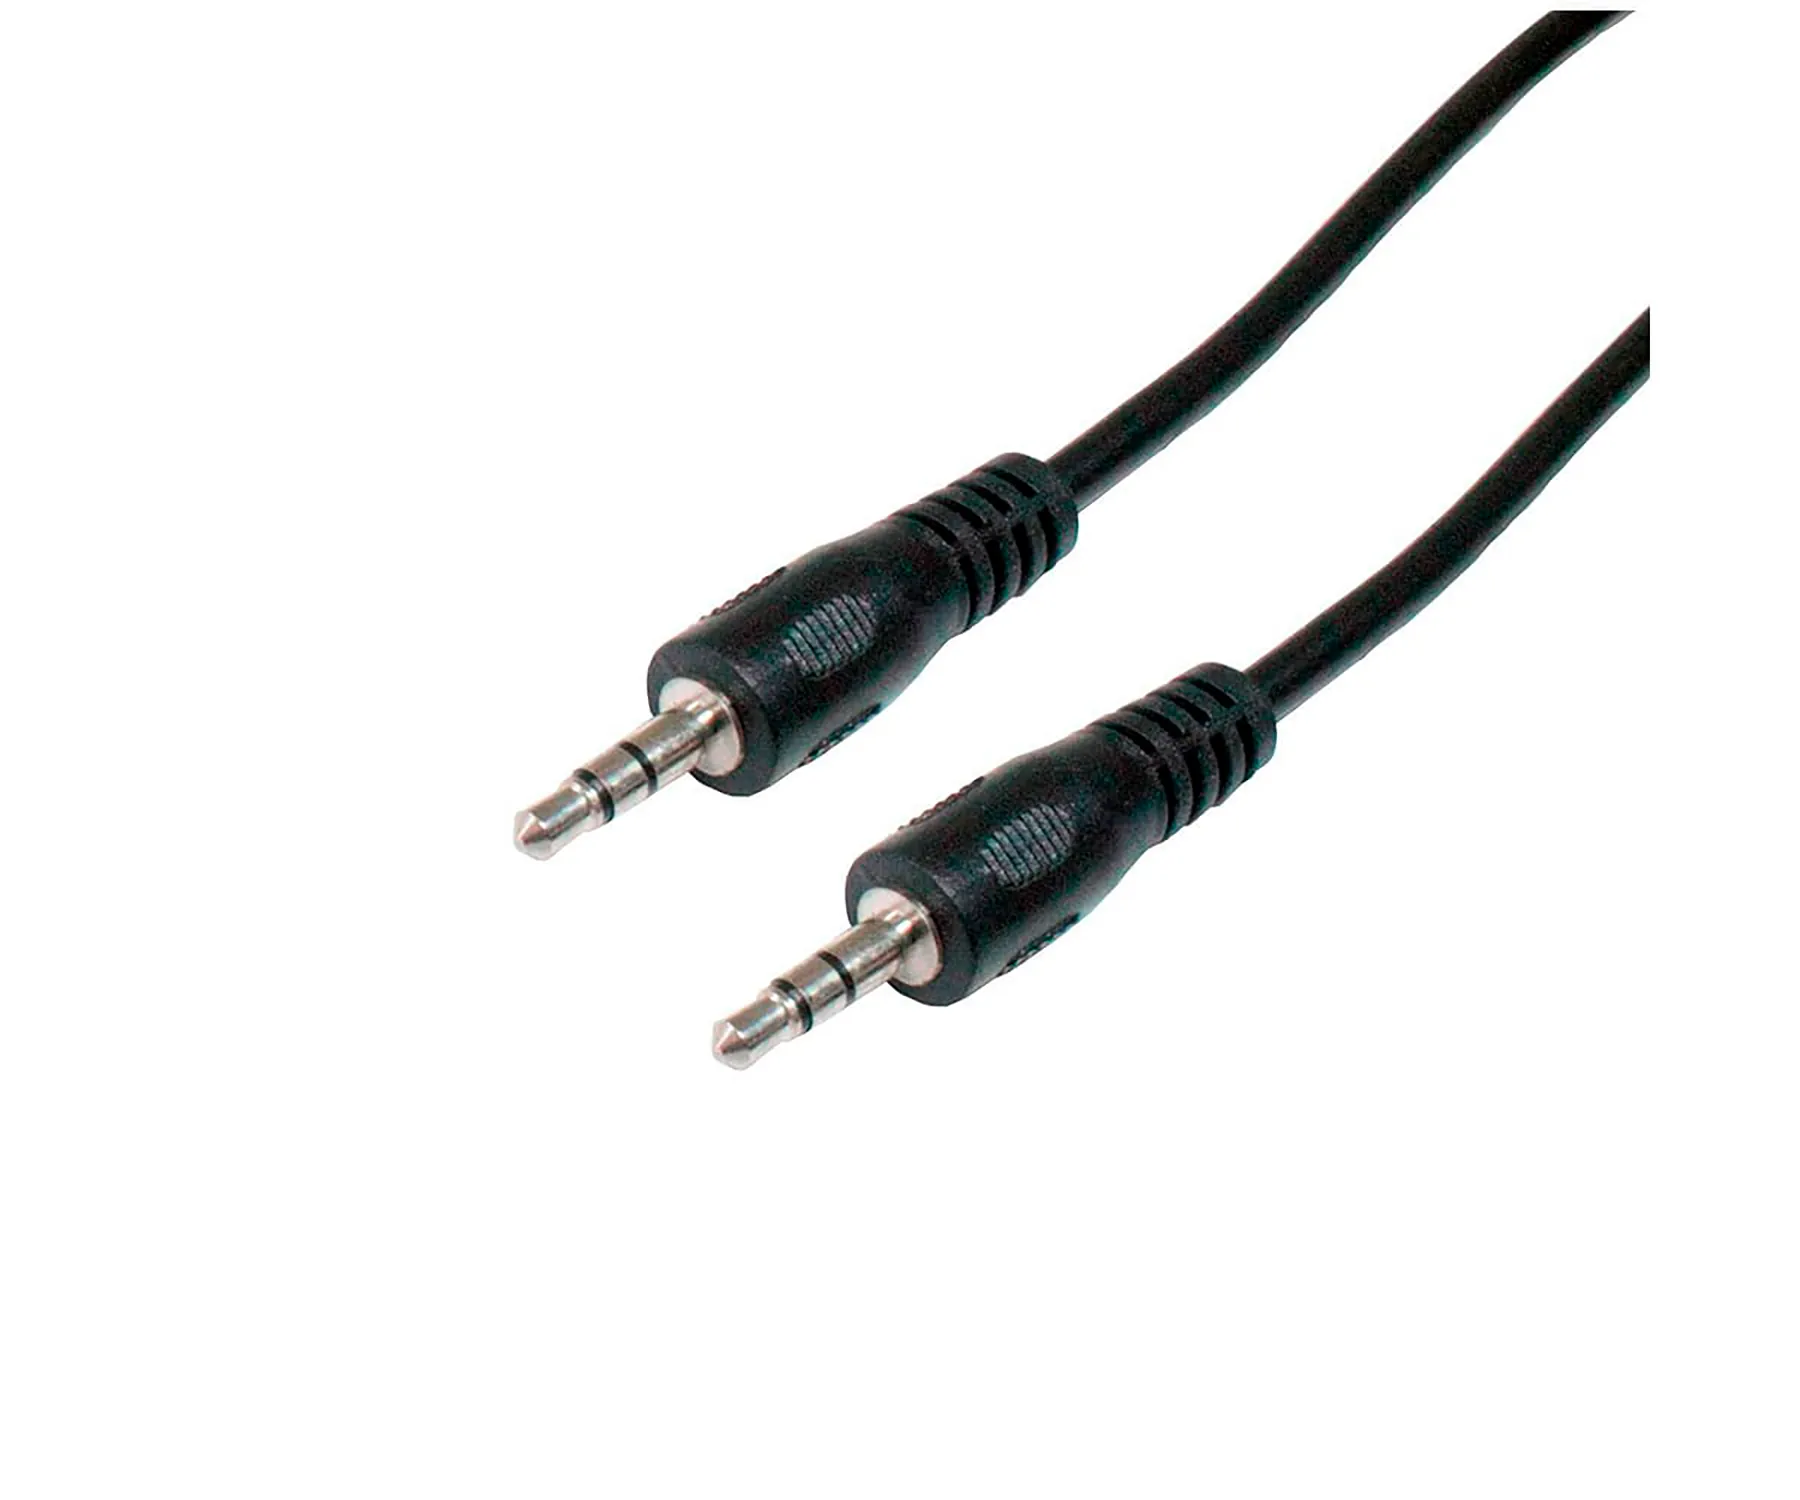 Rojo RoadRoma Cable de Audio Universal Jack de 3,5 mm Conector Macho a Macho Cable de Audio estéreo AUX 